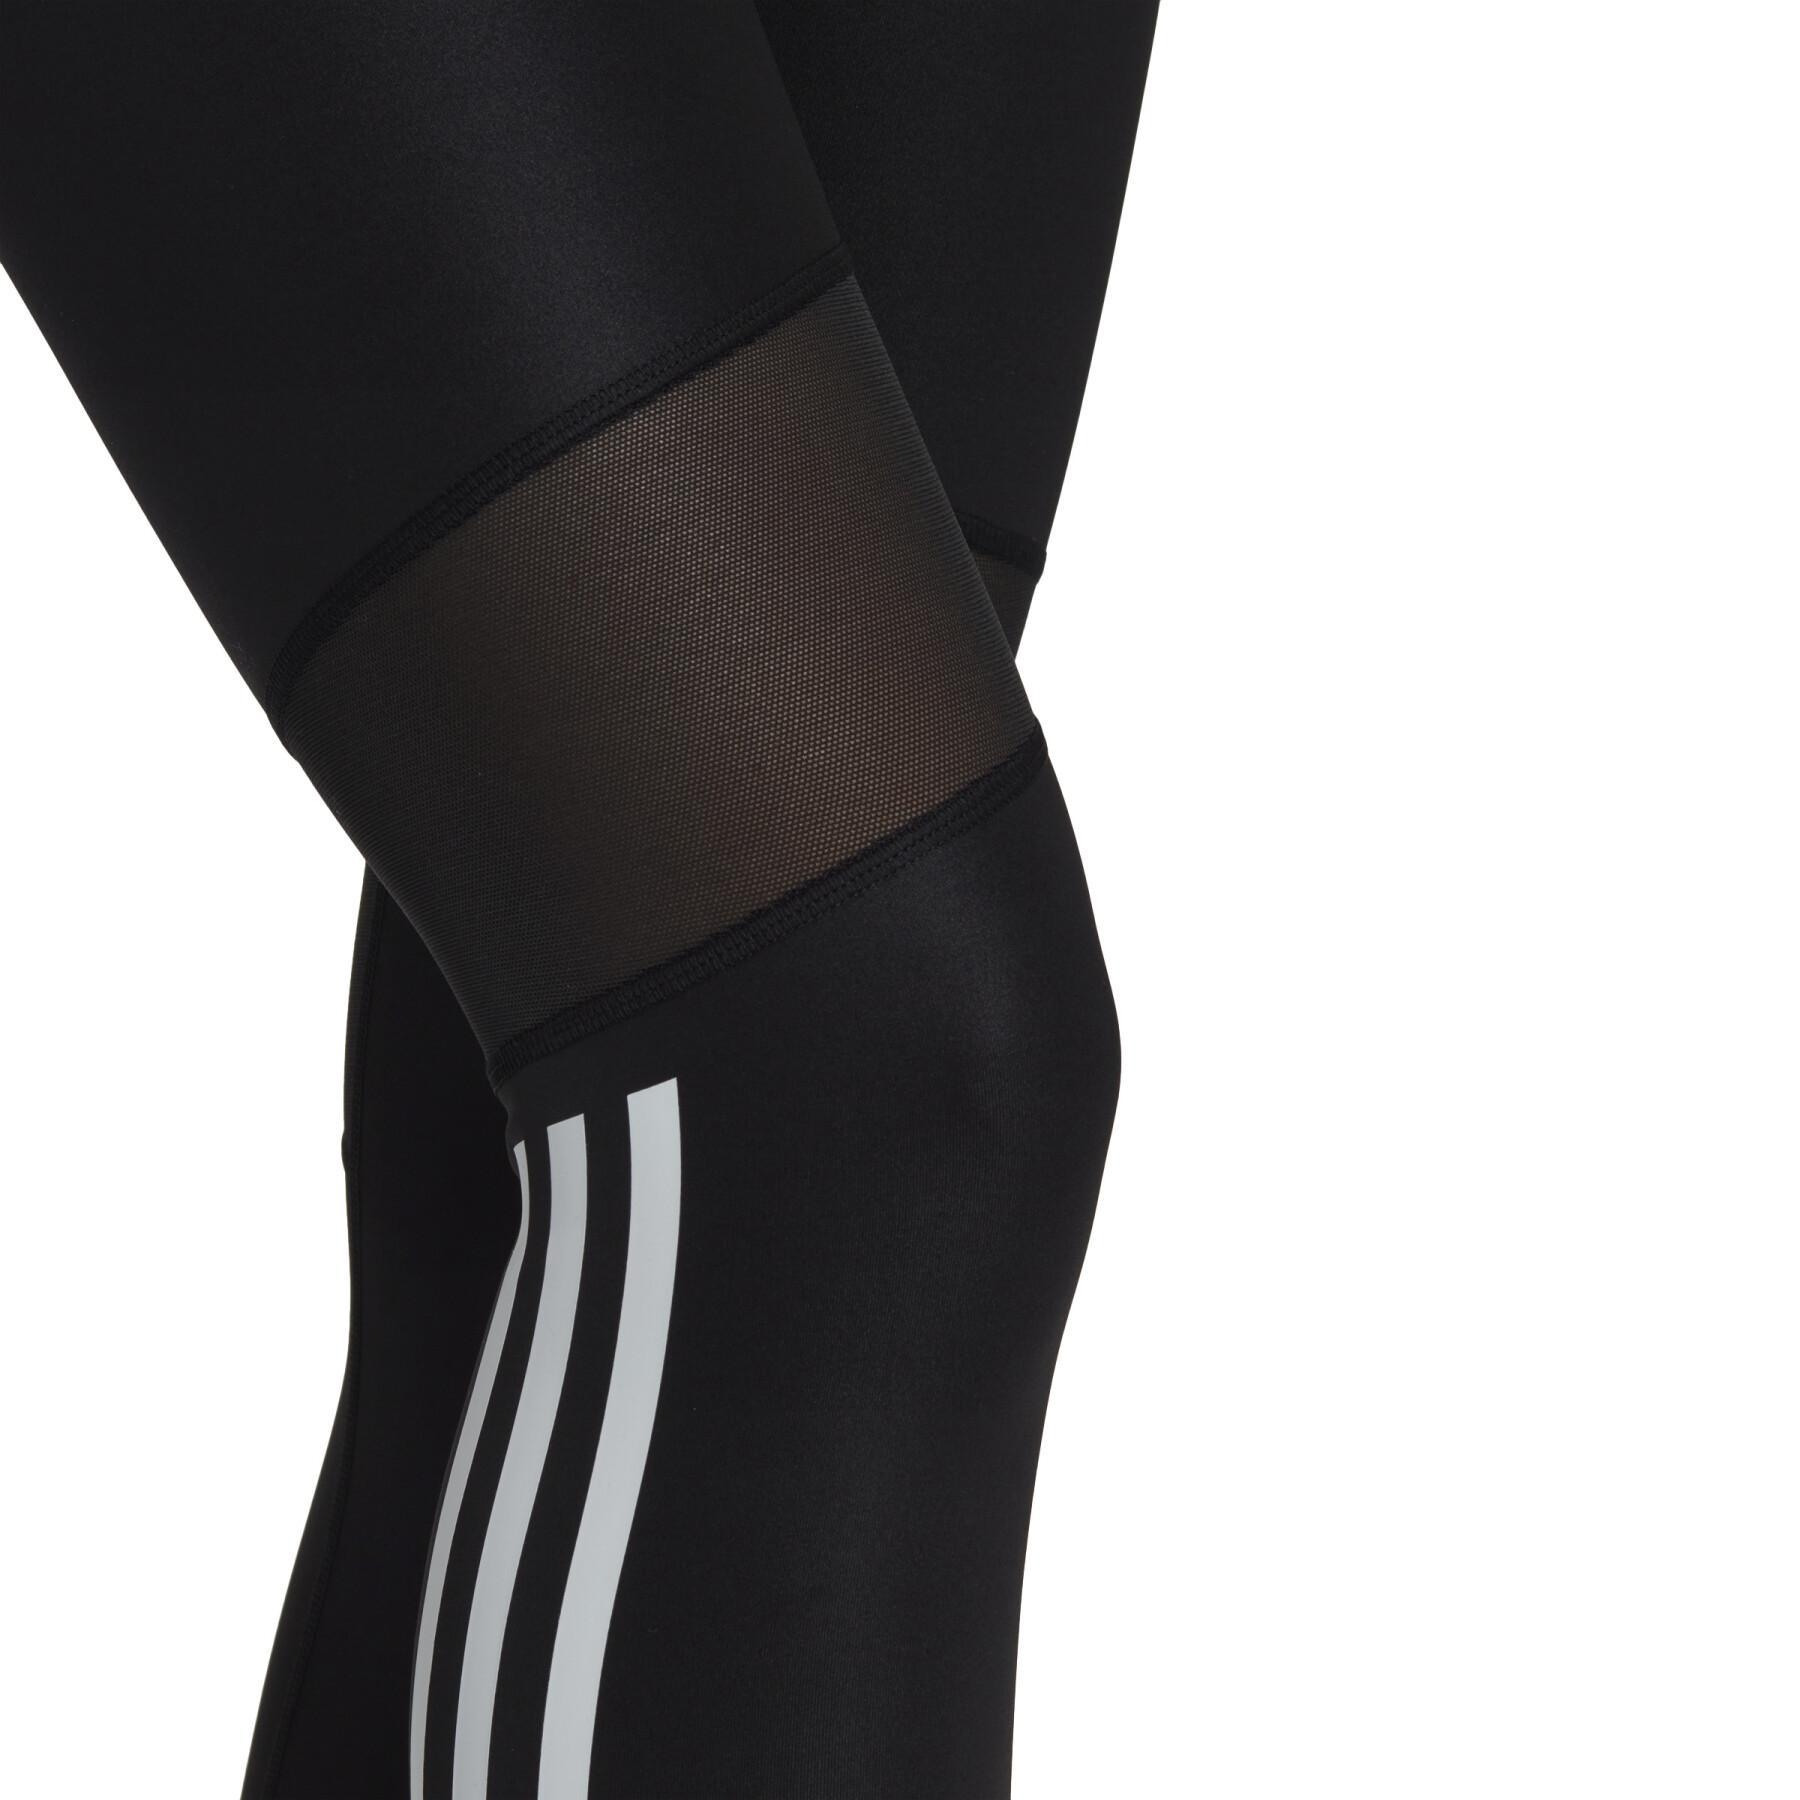 Legging 7/8 3 bands woman adidas Hyperglam - Leggings - Women's clothing -  Fitness